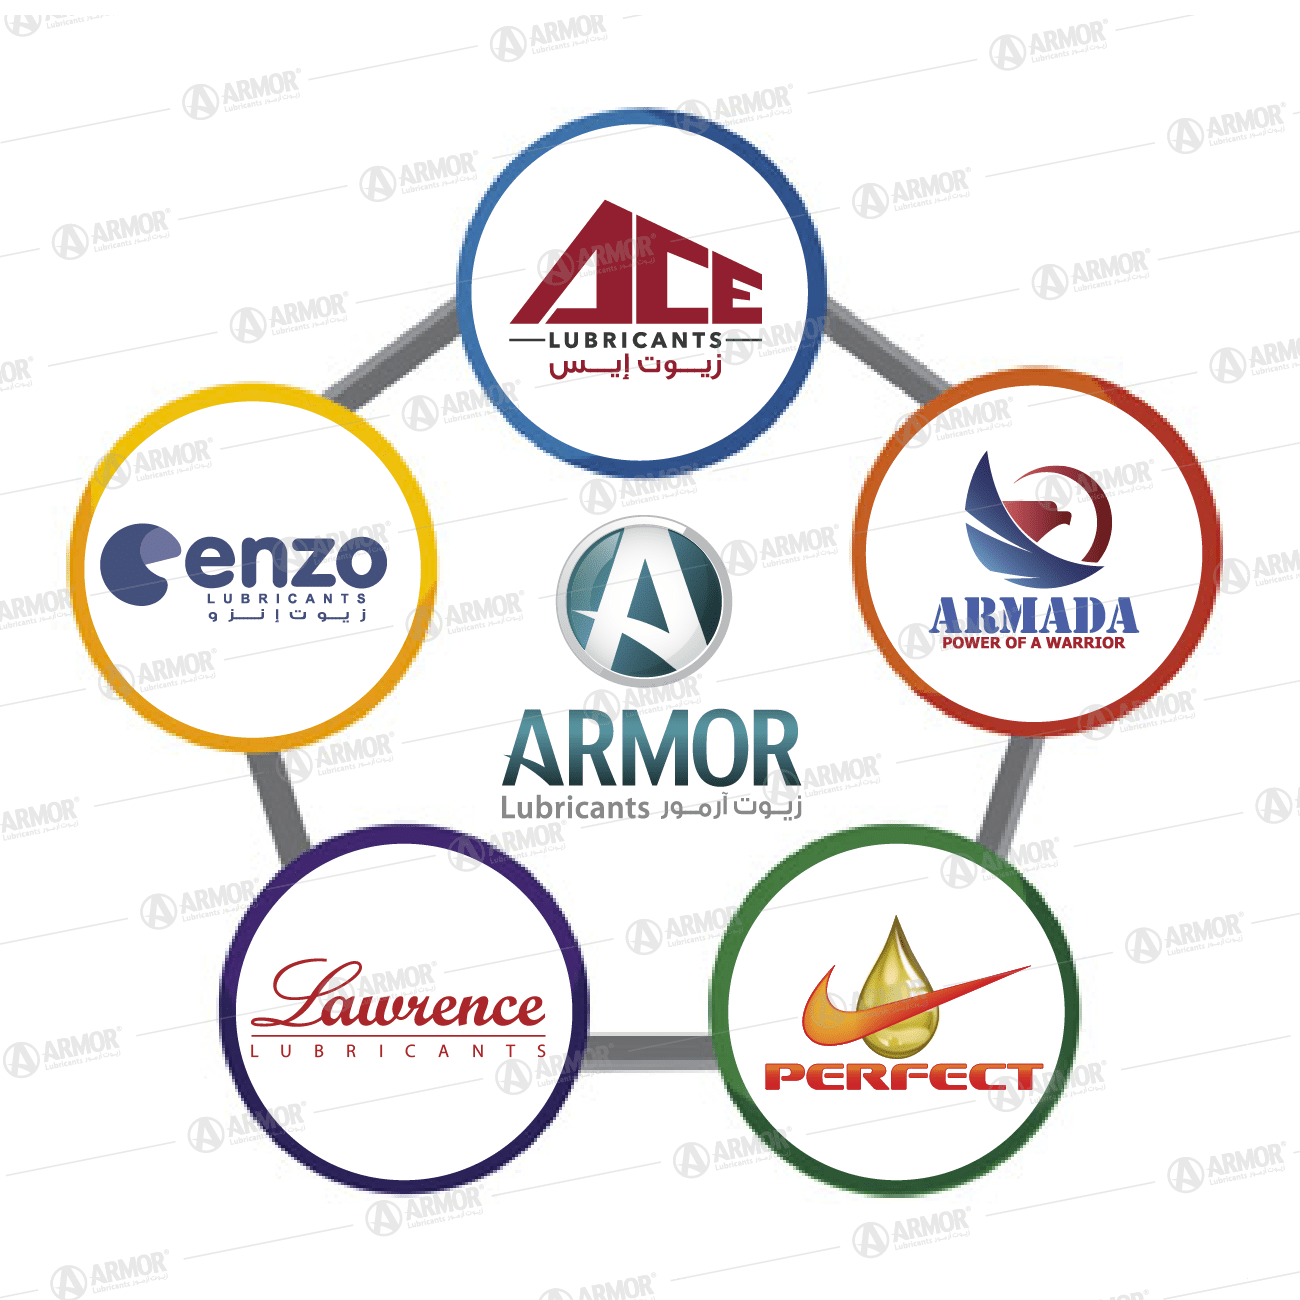 Armor Lubricants Brands